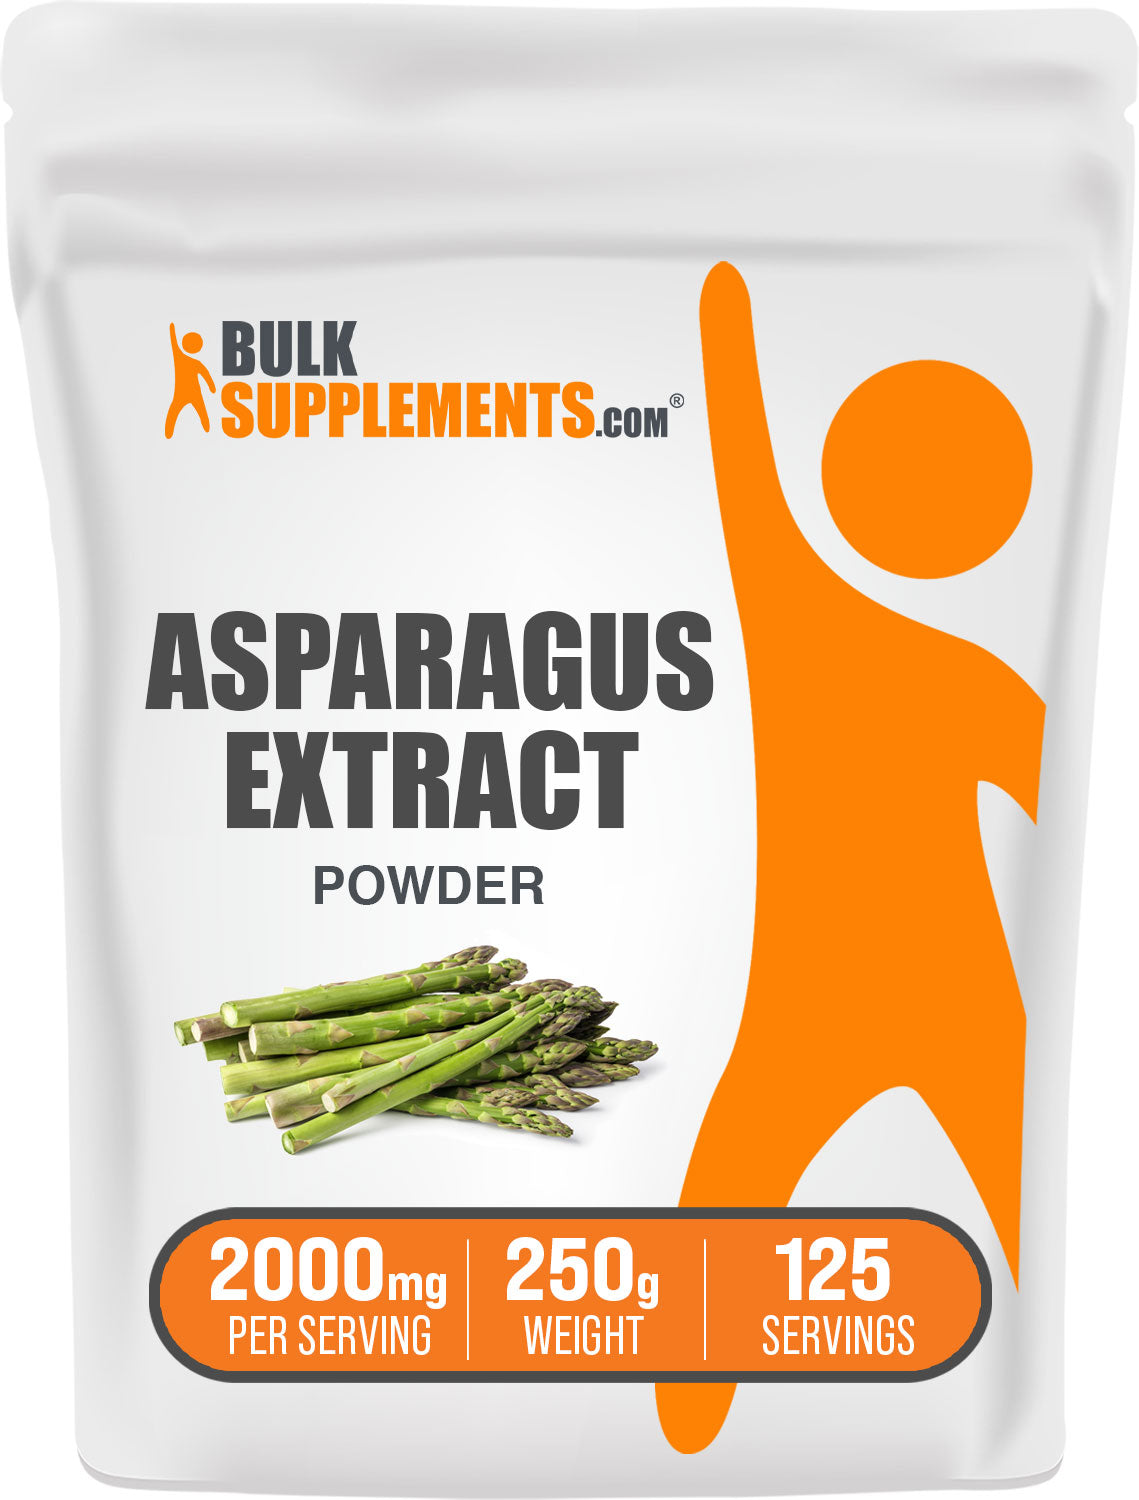 BulkSupplements.com Asparagus Extract Powder 250g Bag